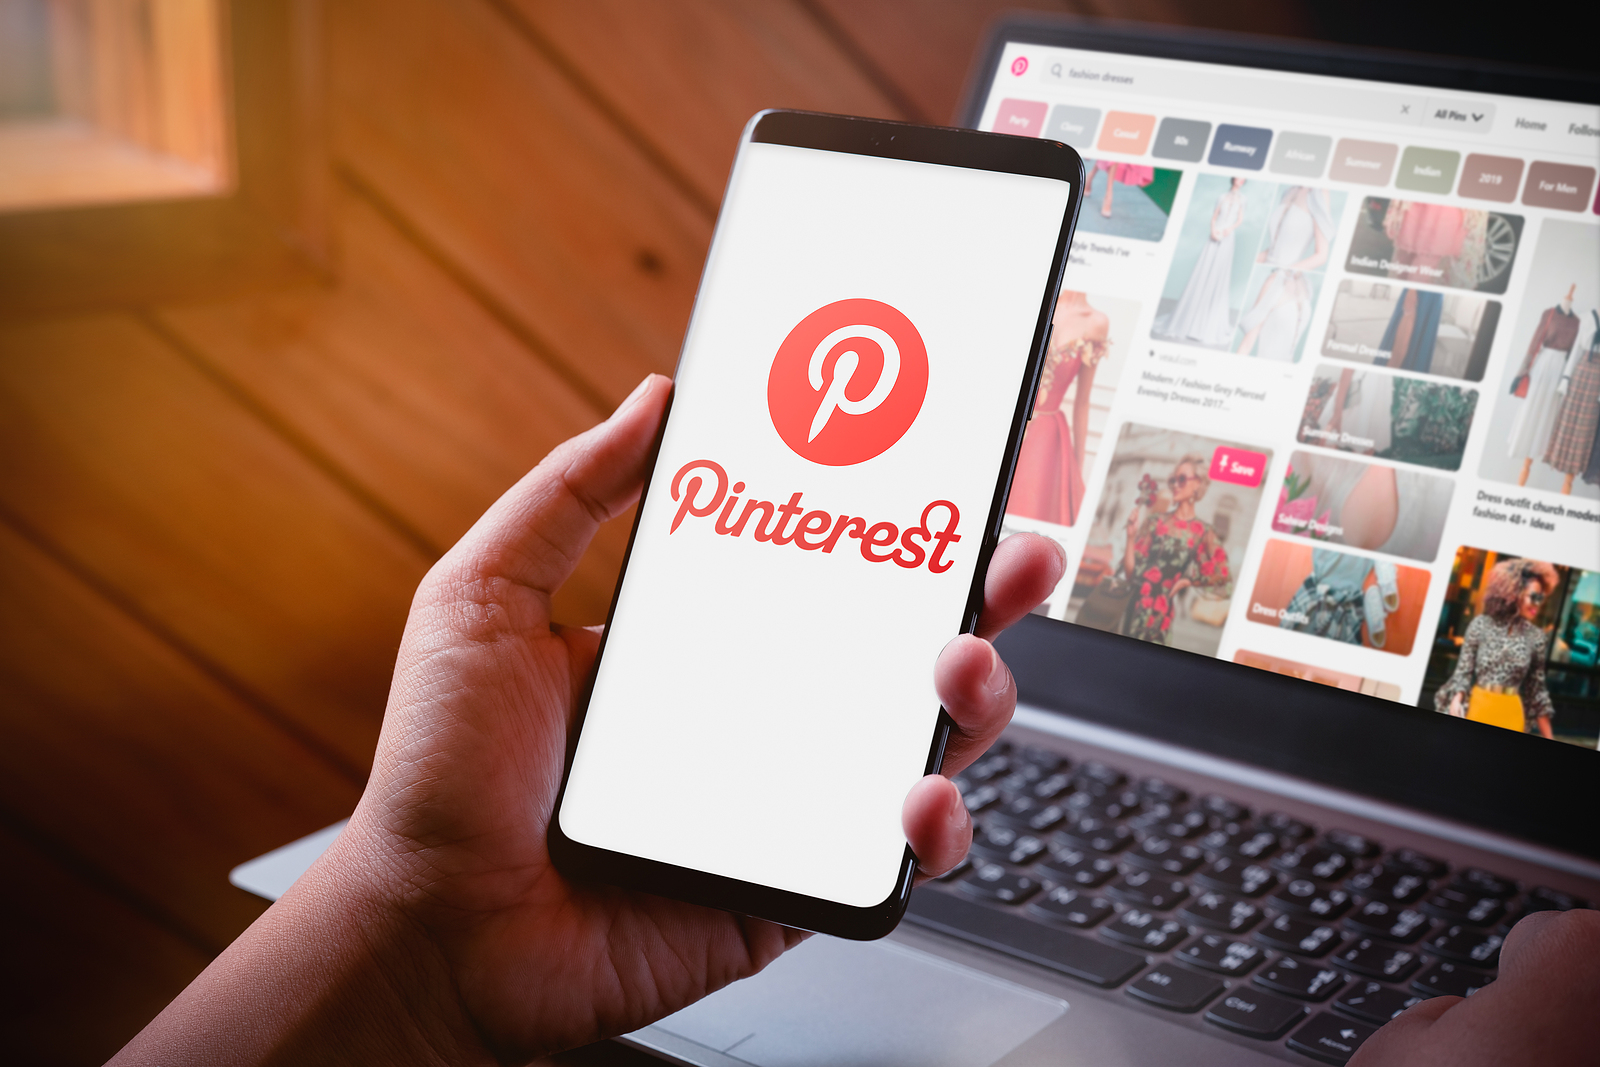 Pinterest stock, PINS stock, Social Media stocks